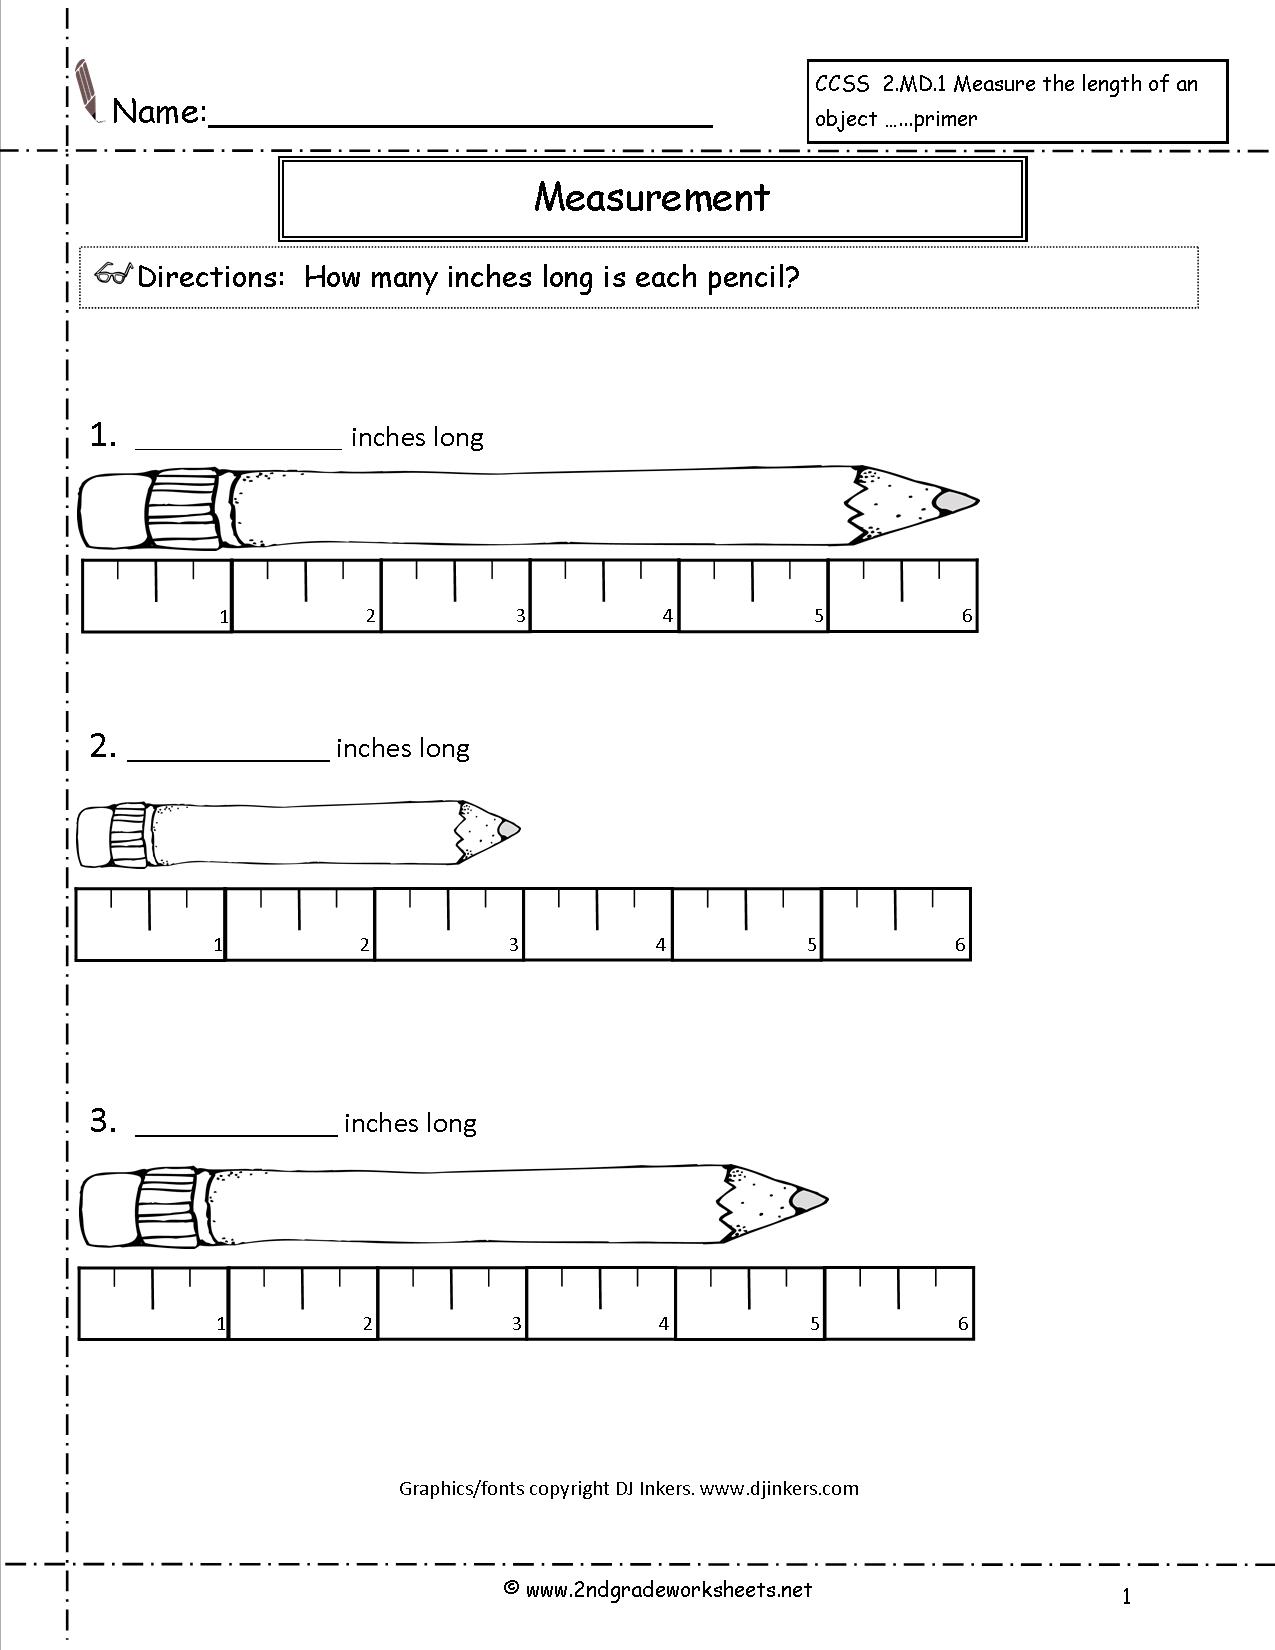 Inch Ruler Measurement Worksheets